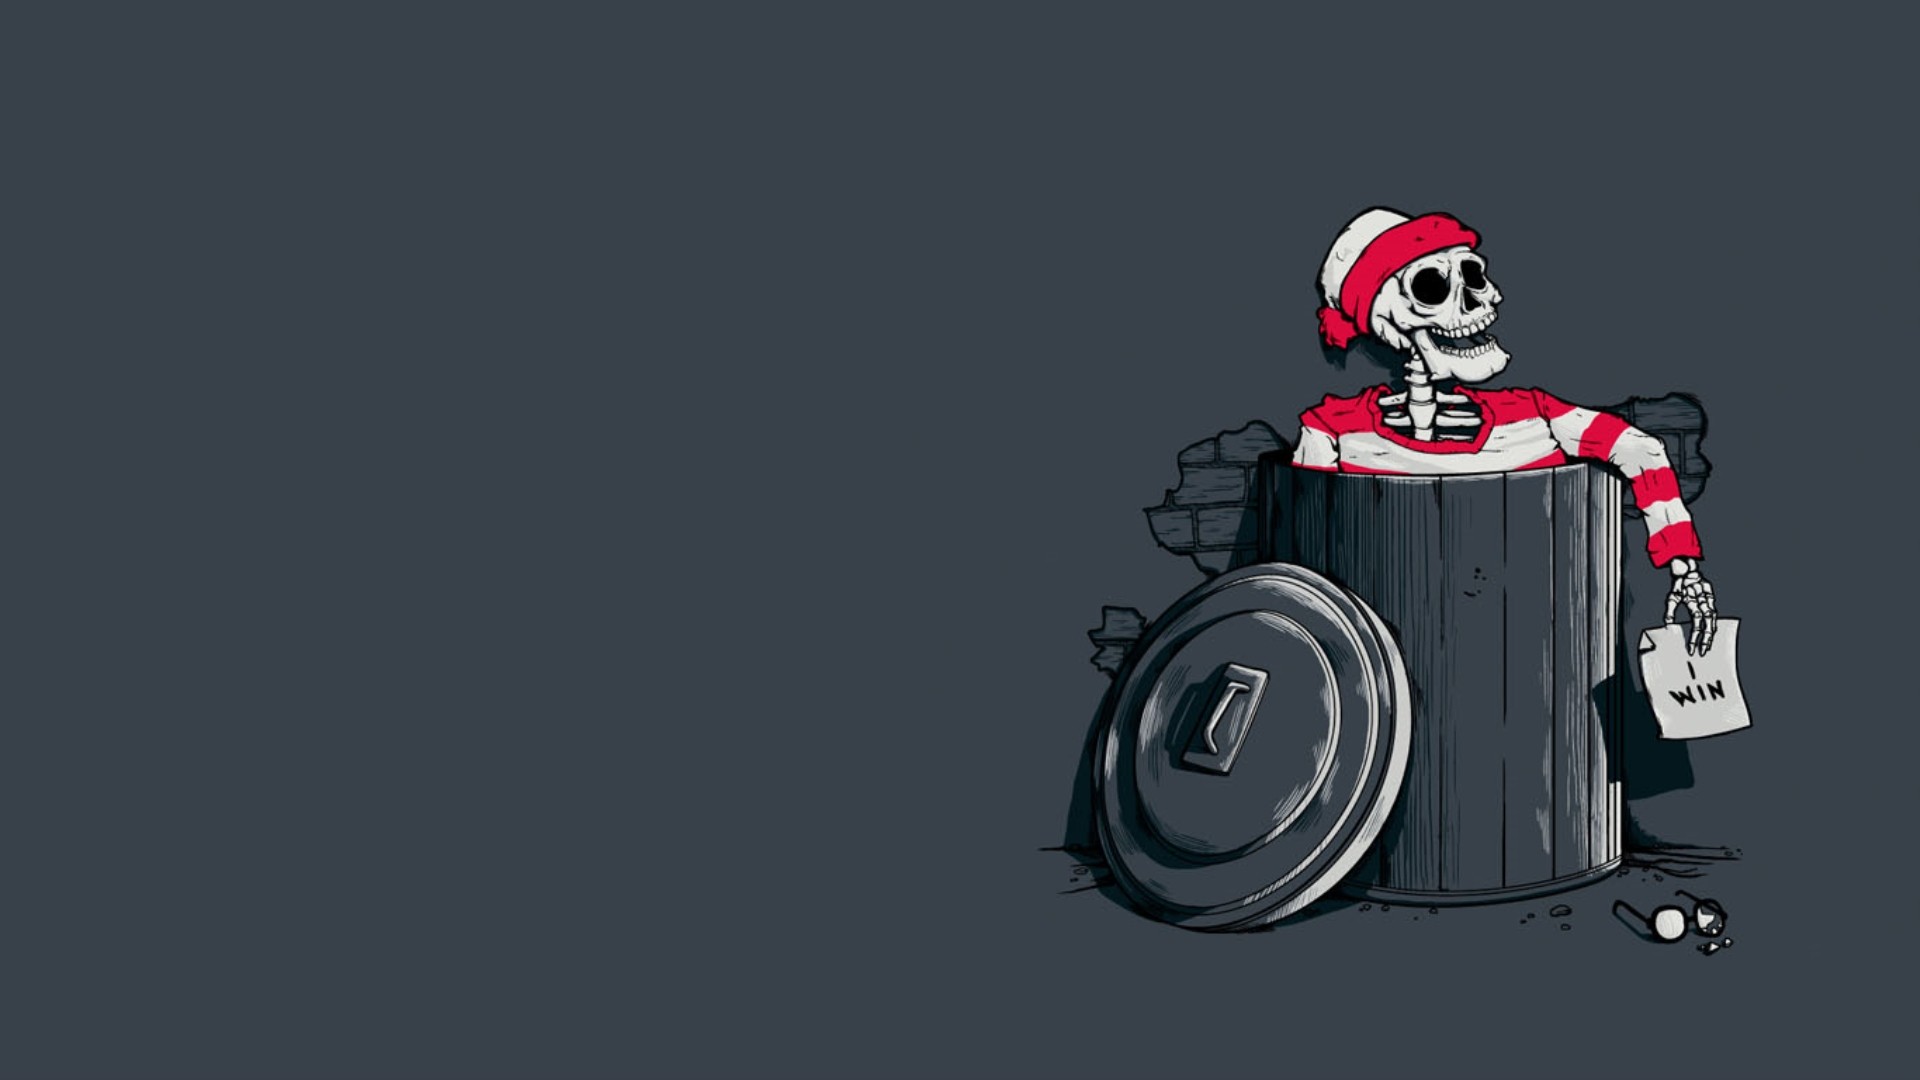 General 1920x1080 skull skeleton humor dark humor minimalism bones gray background simple background